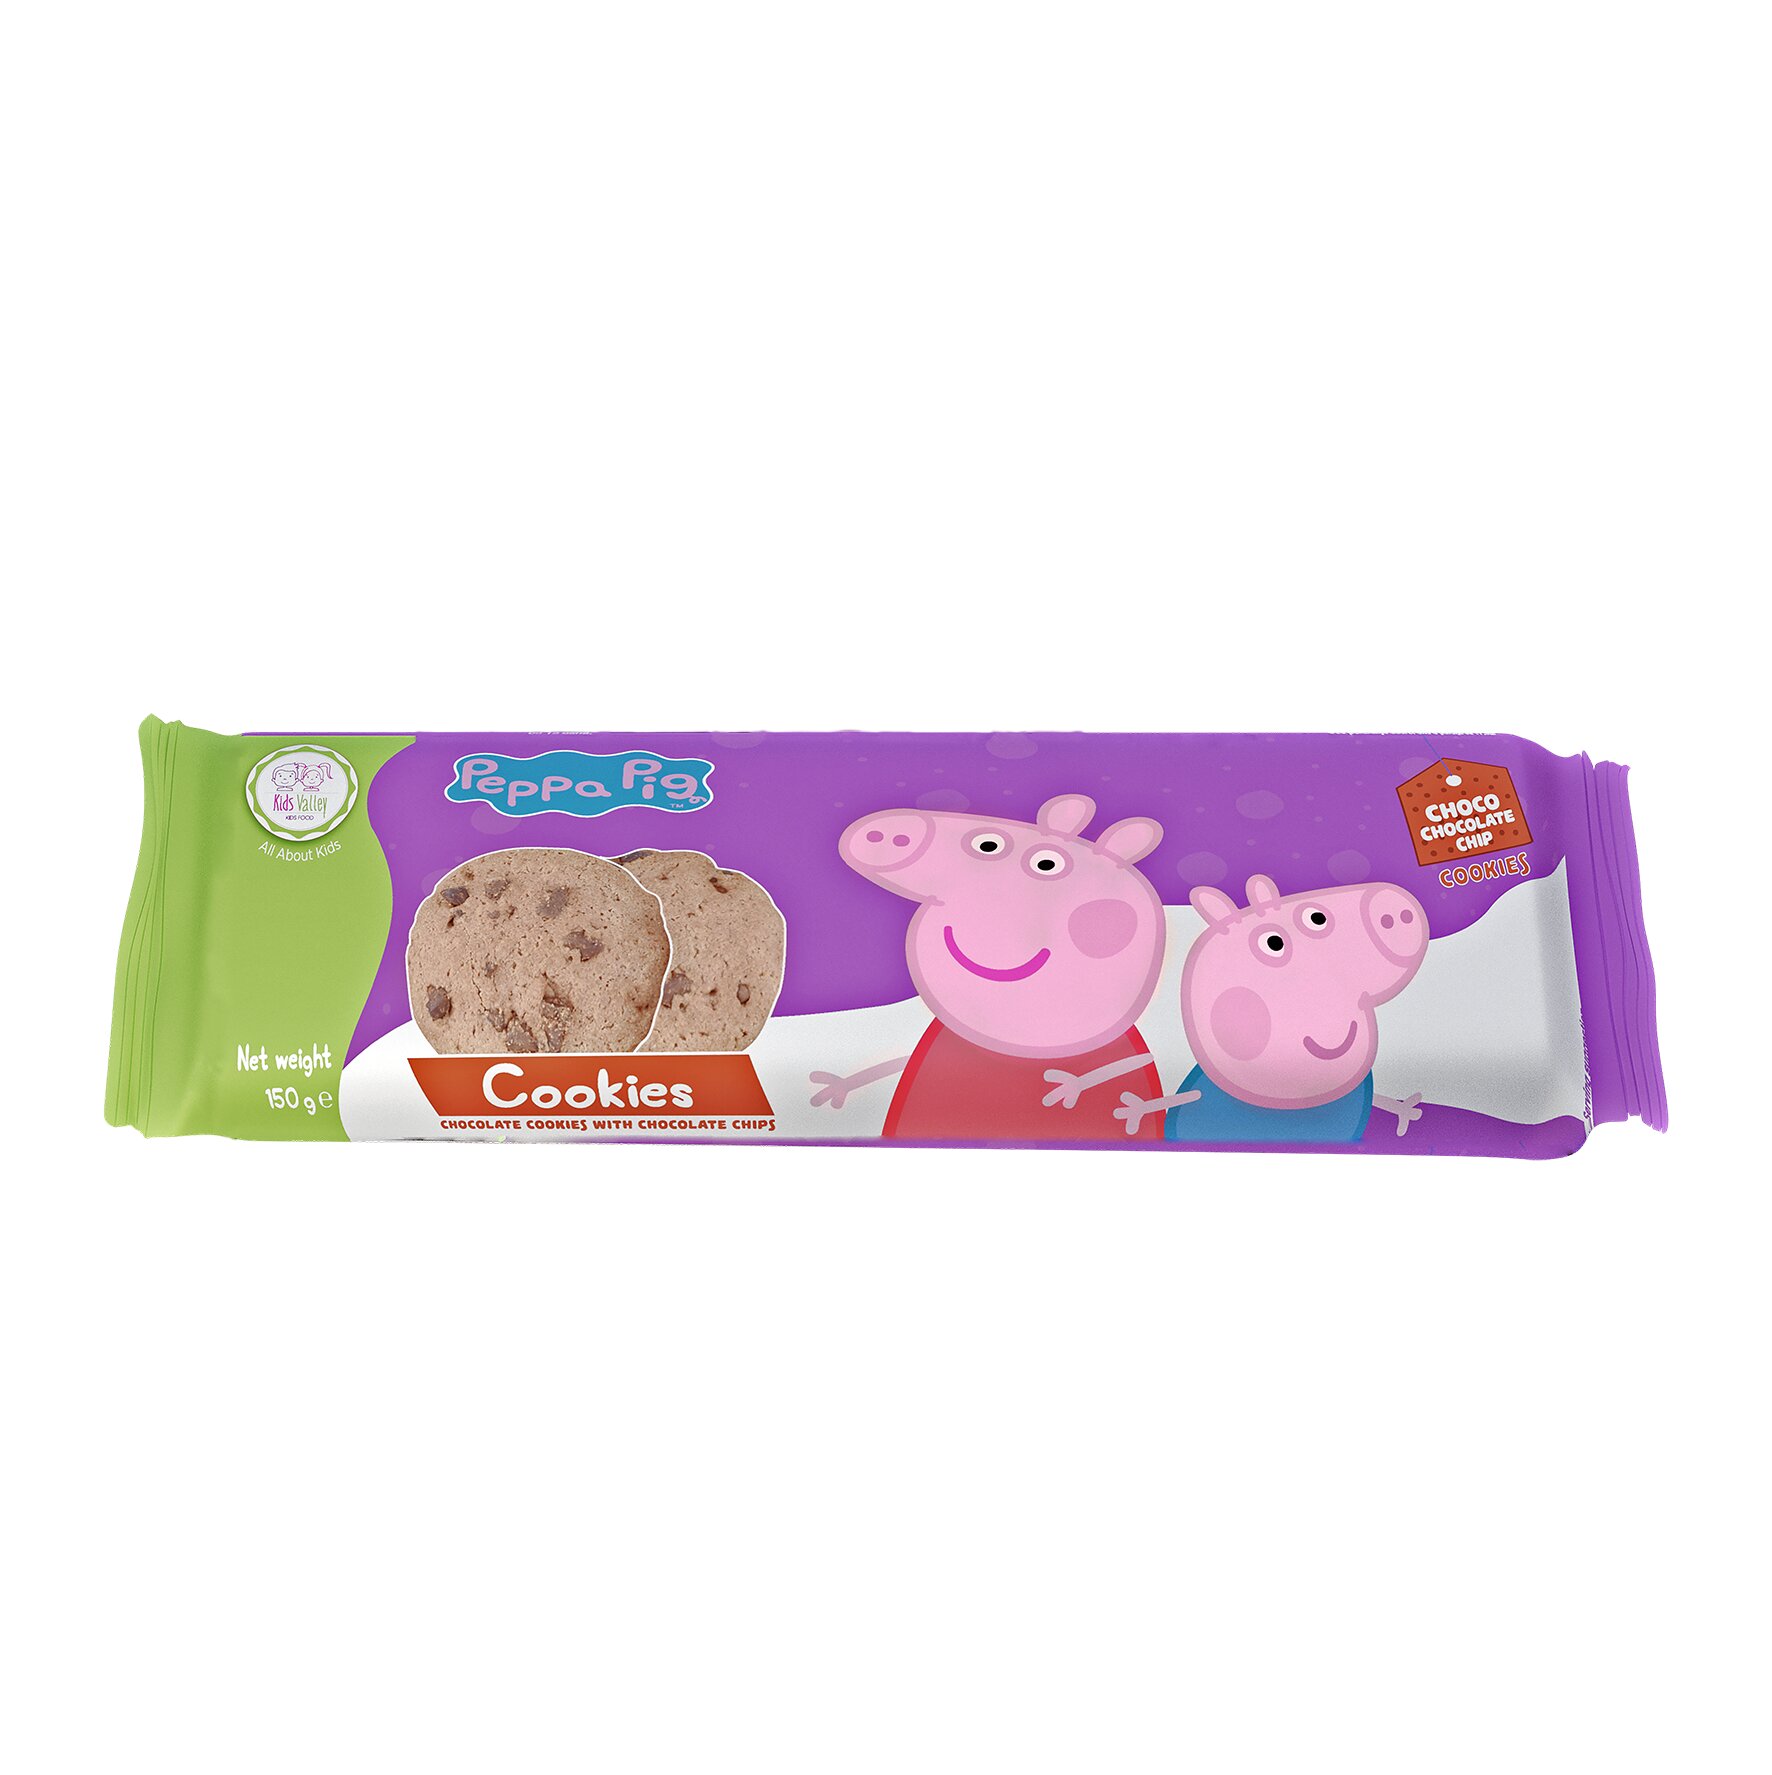 Kids Valley Μπισκότα Peppa Pig με Κομματάκια Σοκολάτας 150g